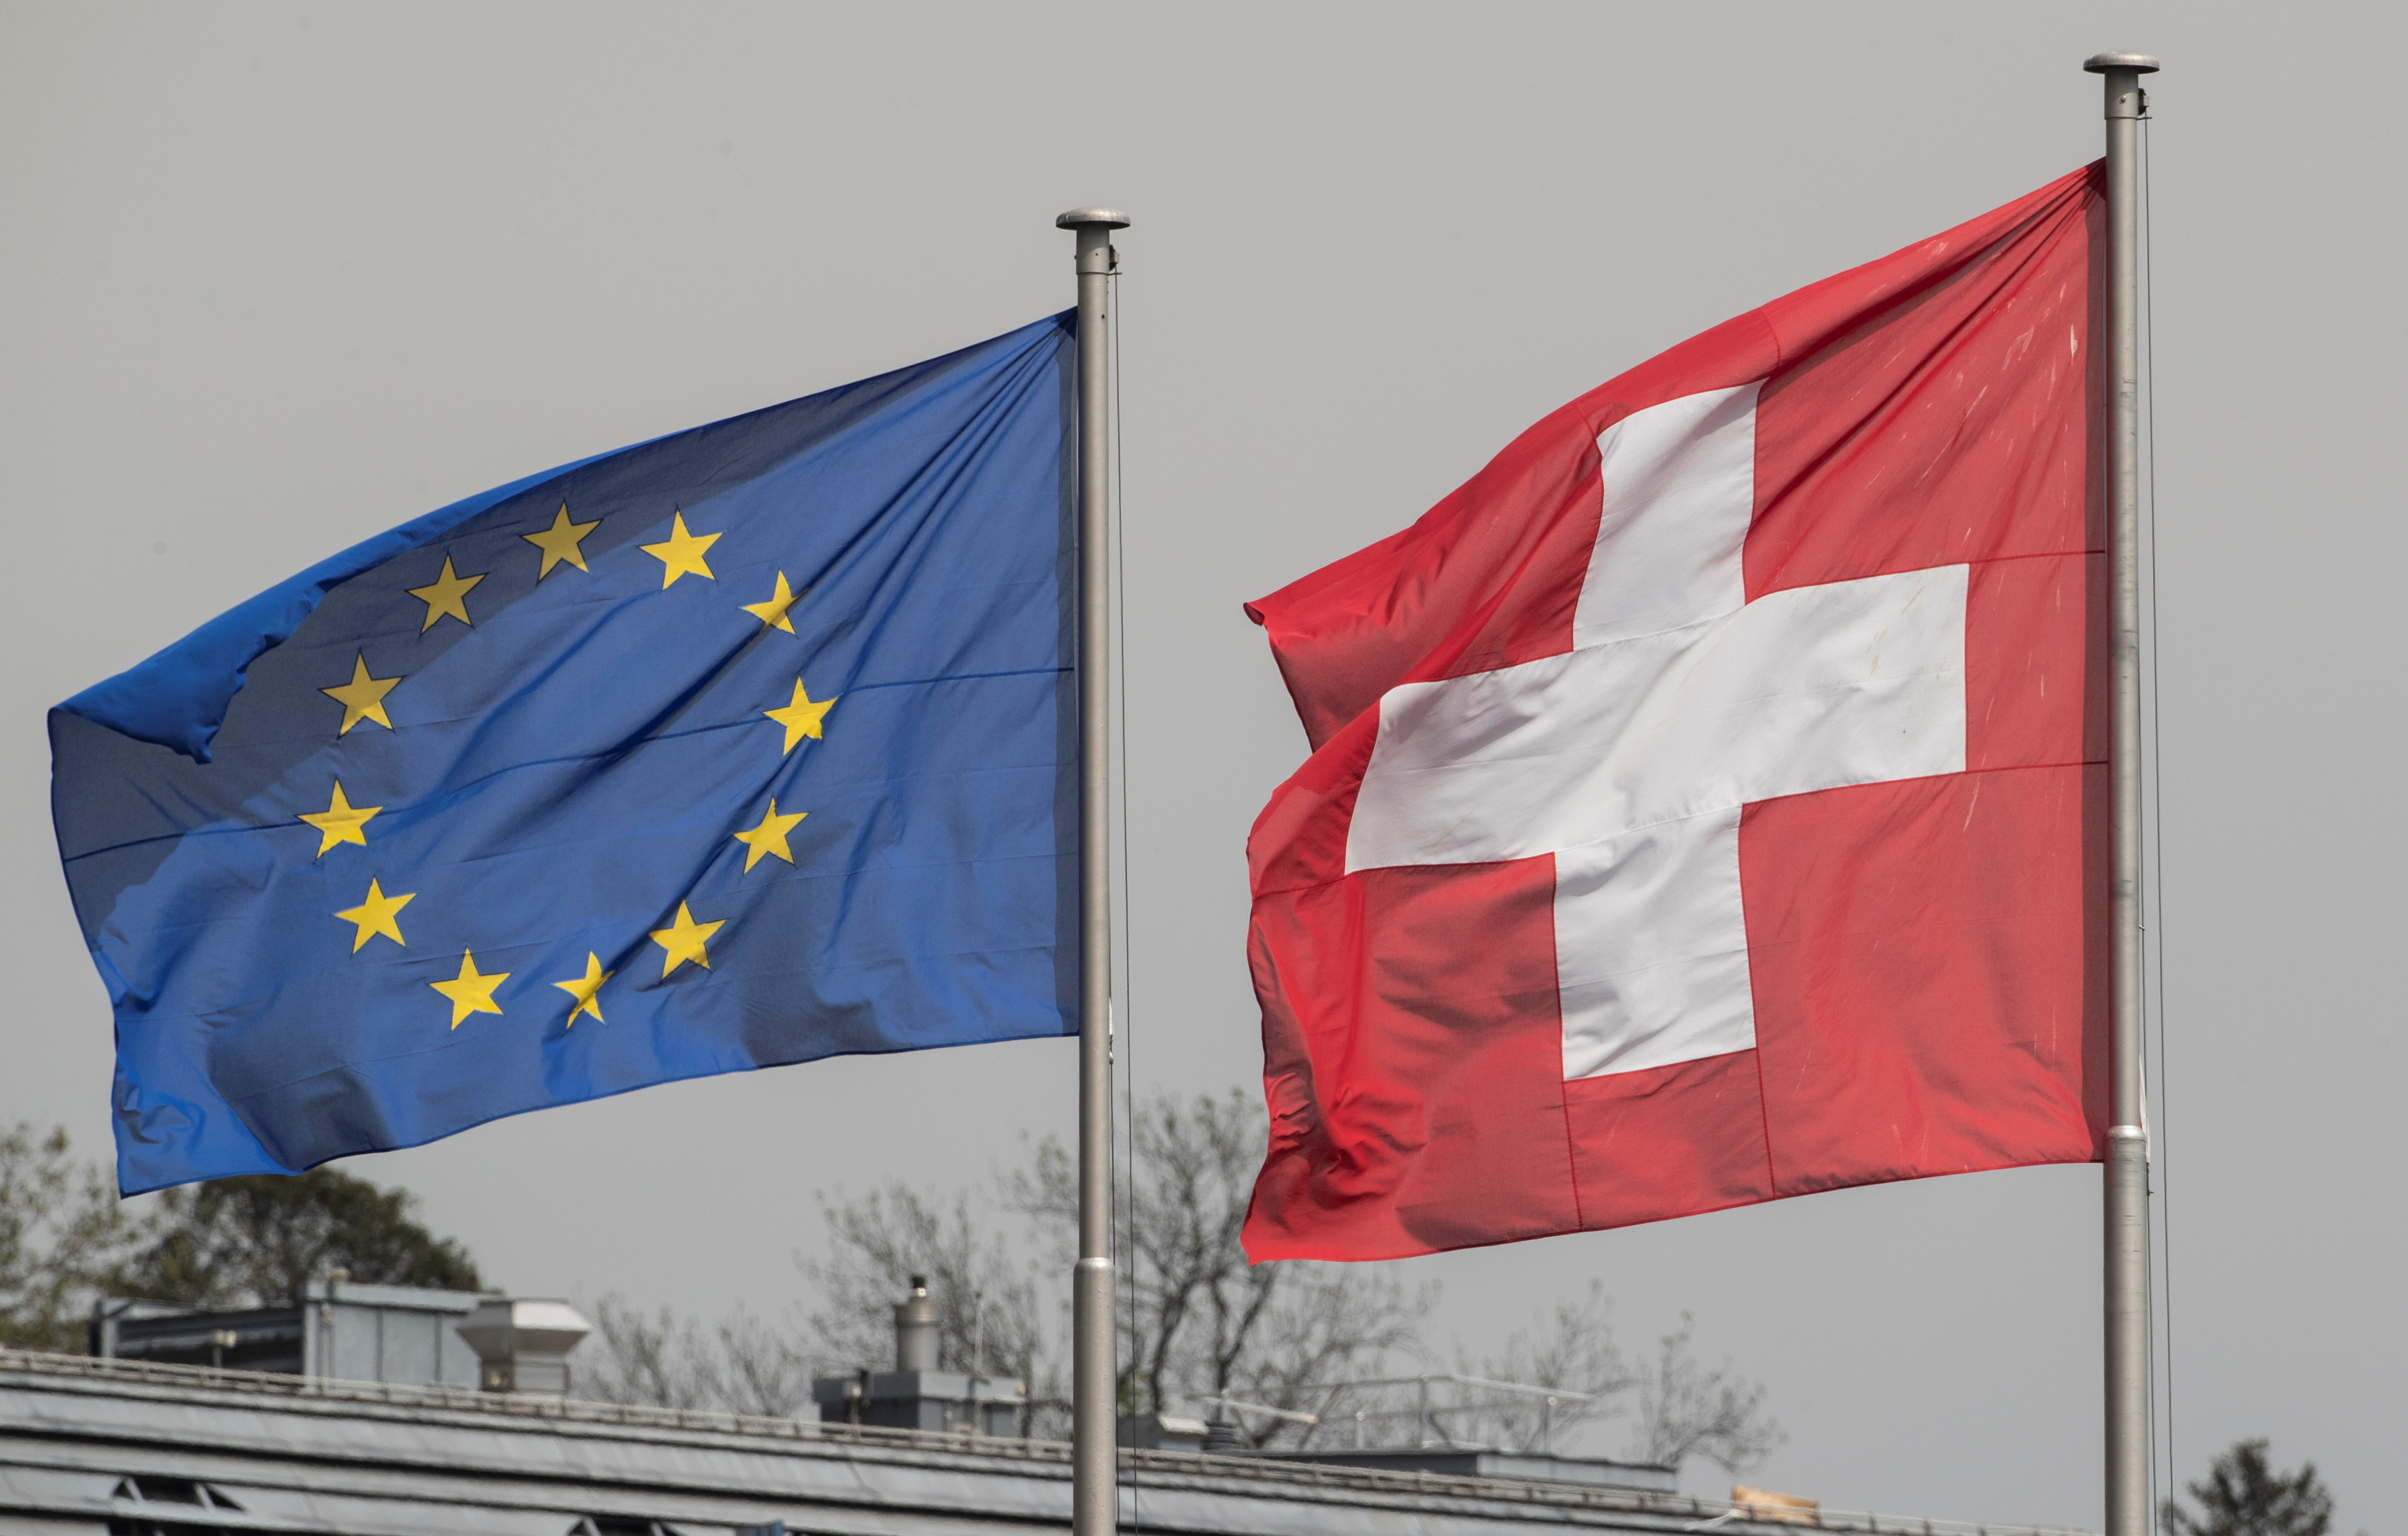 Switzerland's national flag flies beside the one of the European Union in Zurich